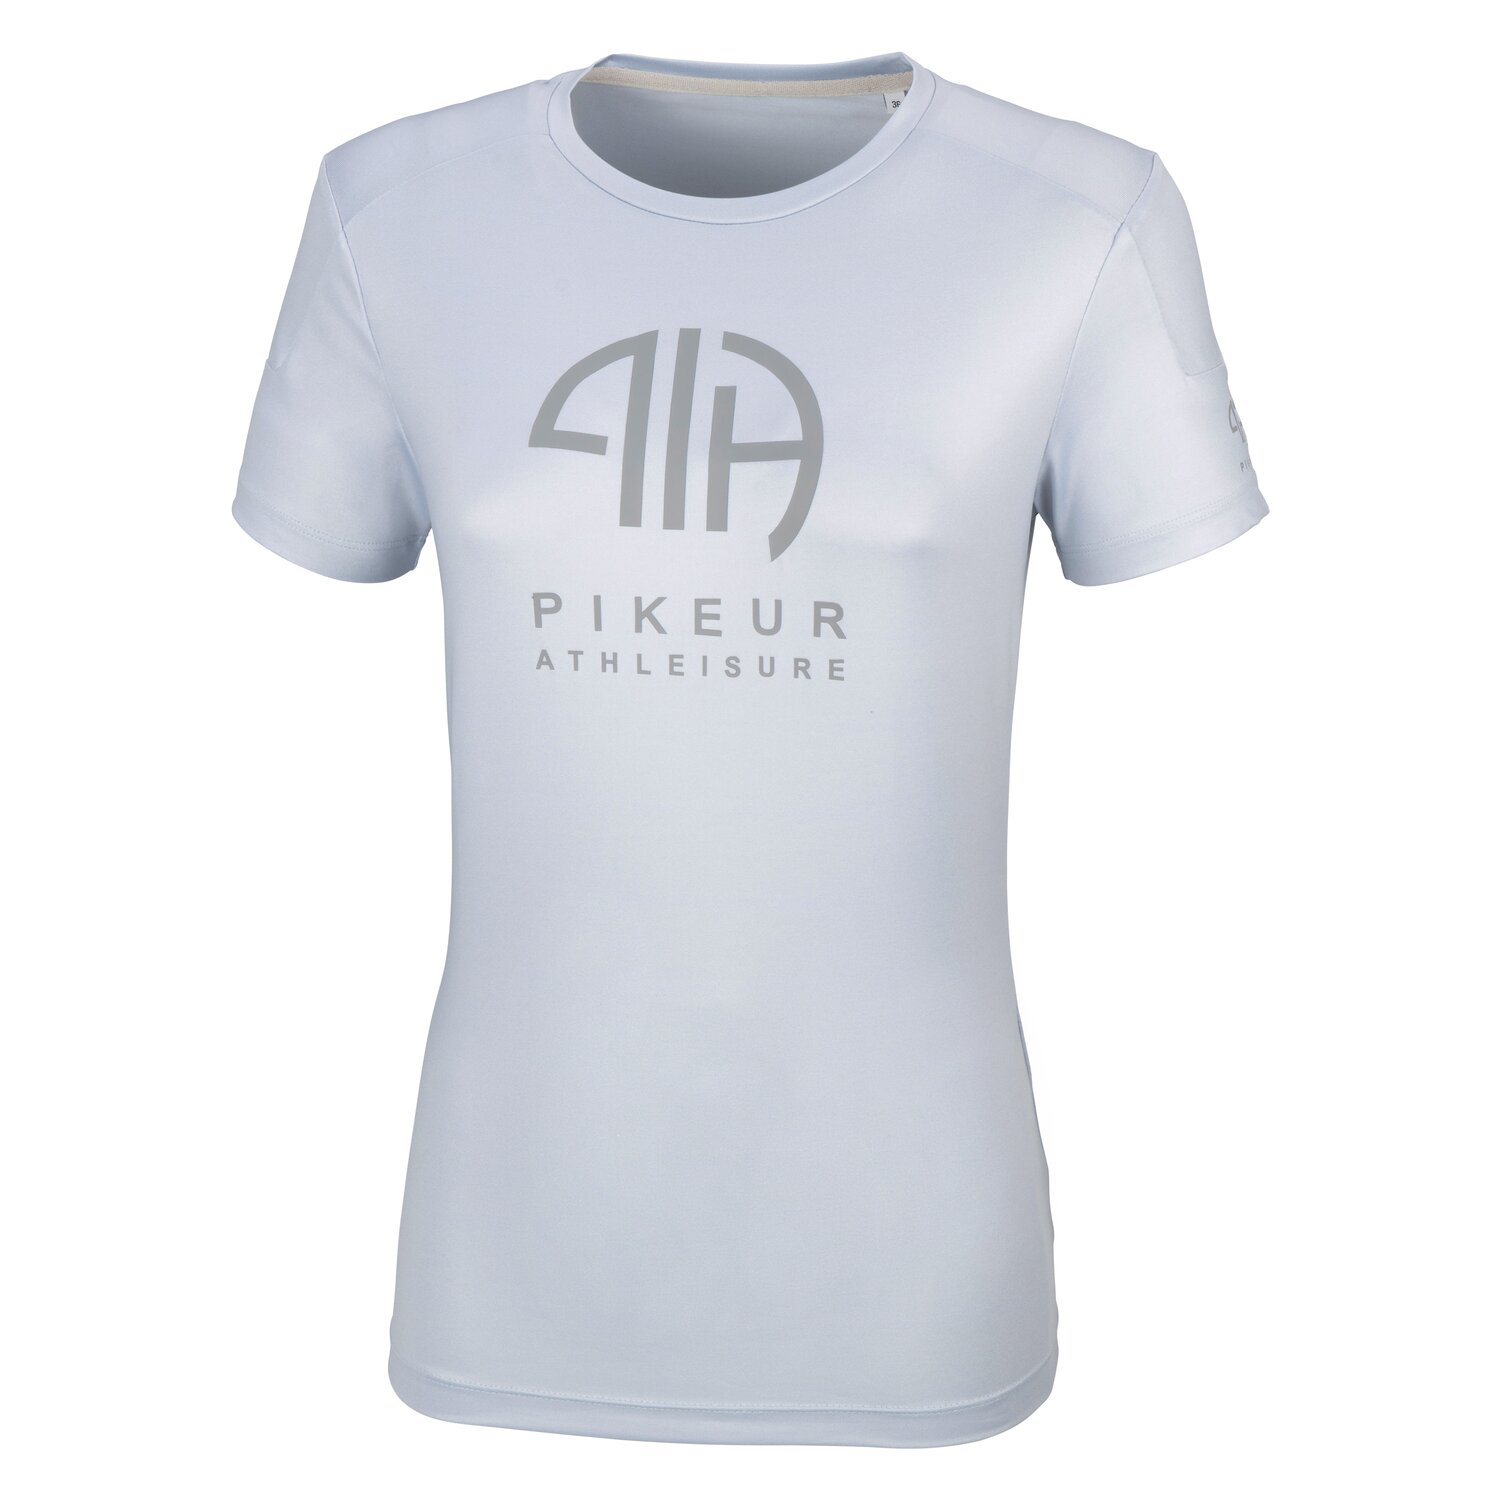 PIKEUR Hybrid-Shirt Trixi Athleisure velvet grey | 44